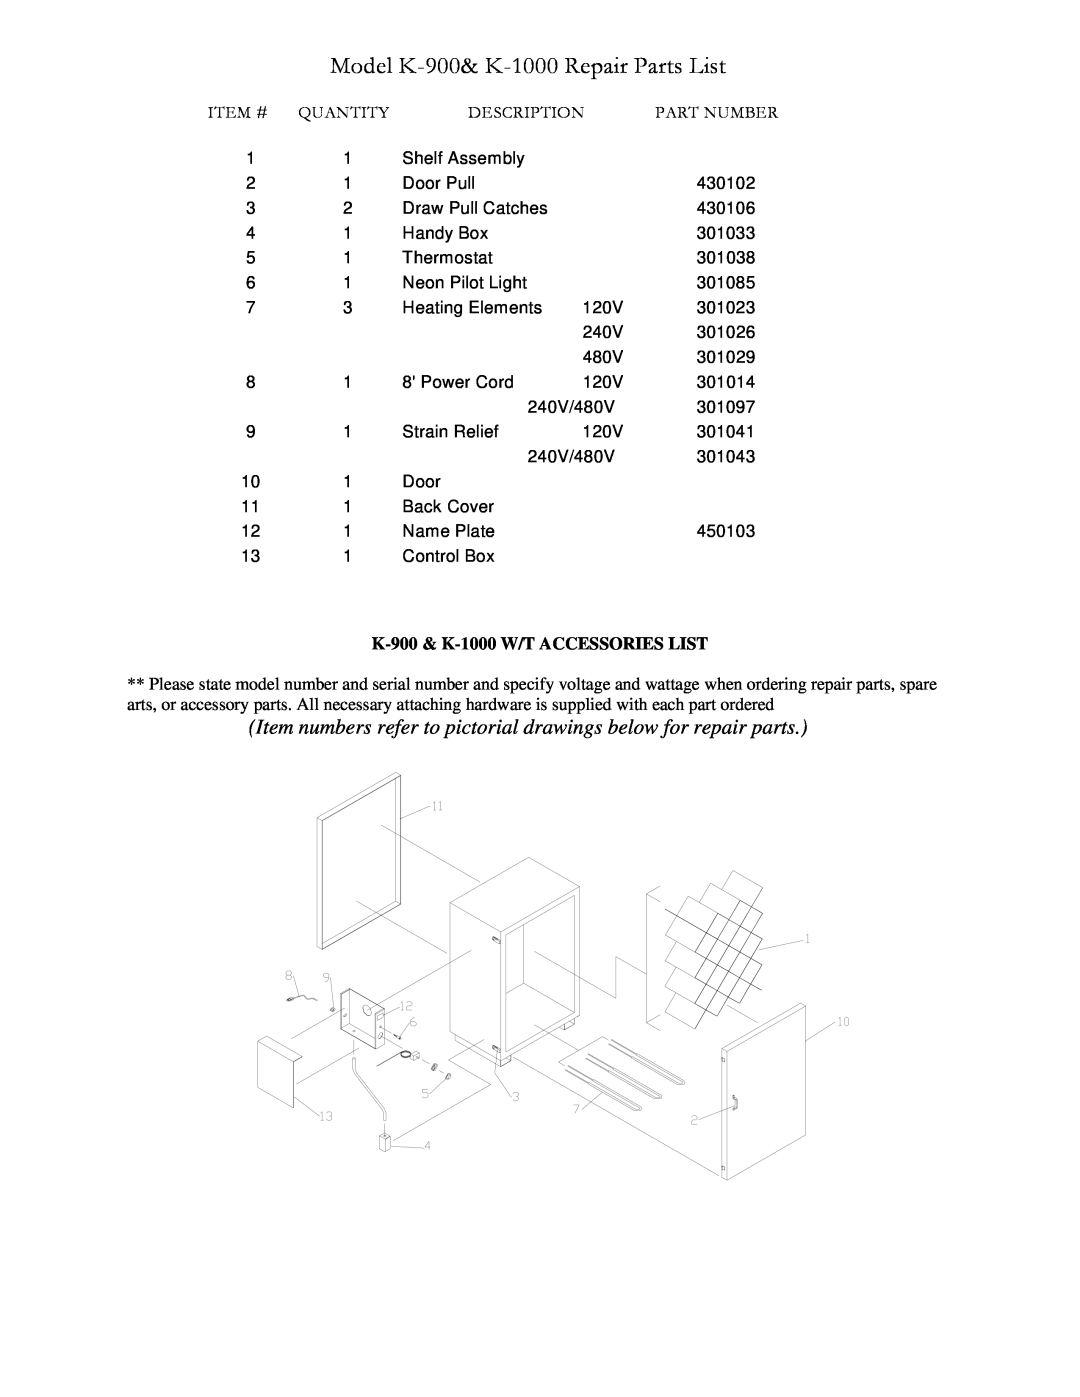 Henkel manual Model K-900& K-1000Repair Parts List, K-900& K-1000W/T ACCESSORIES LIST 